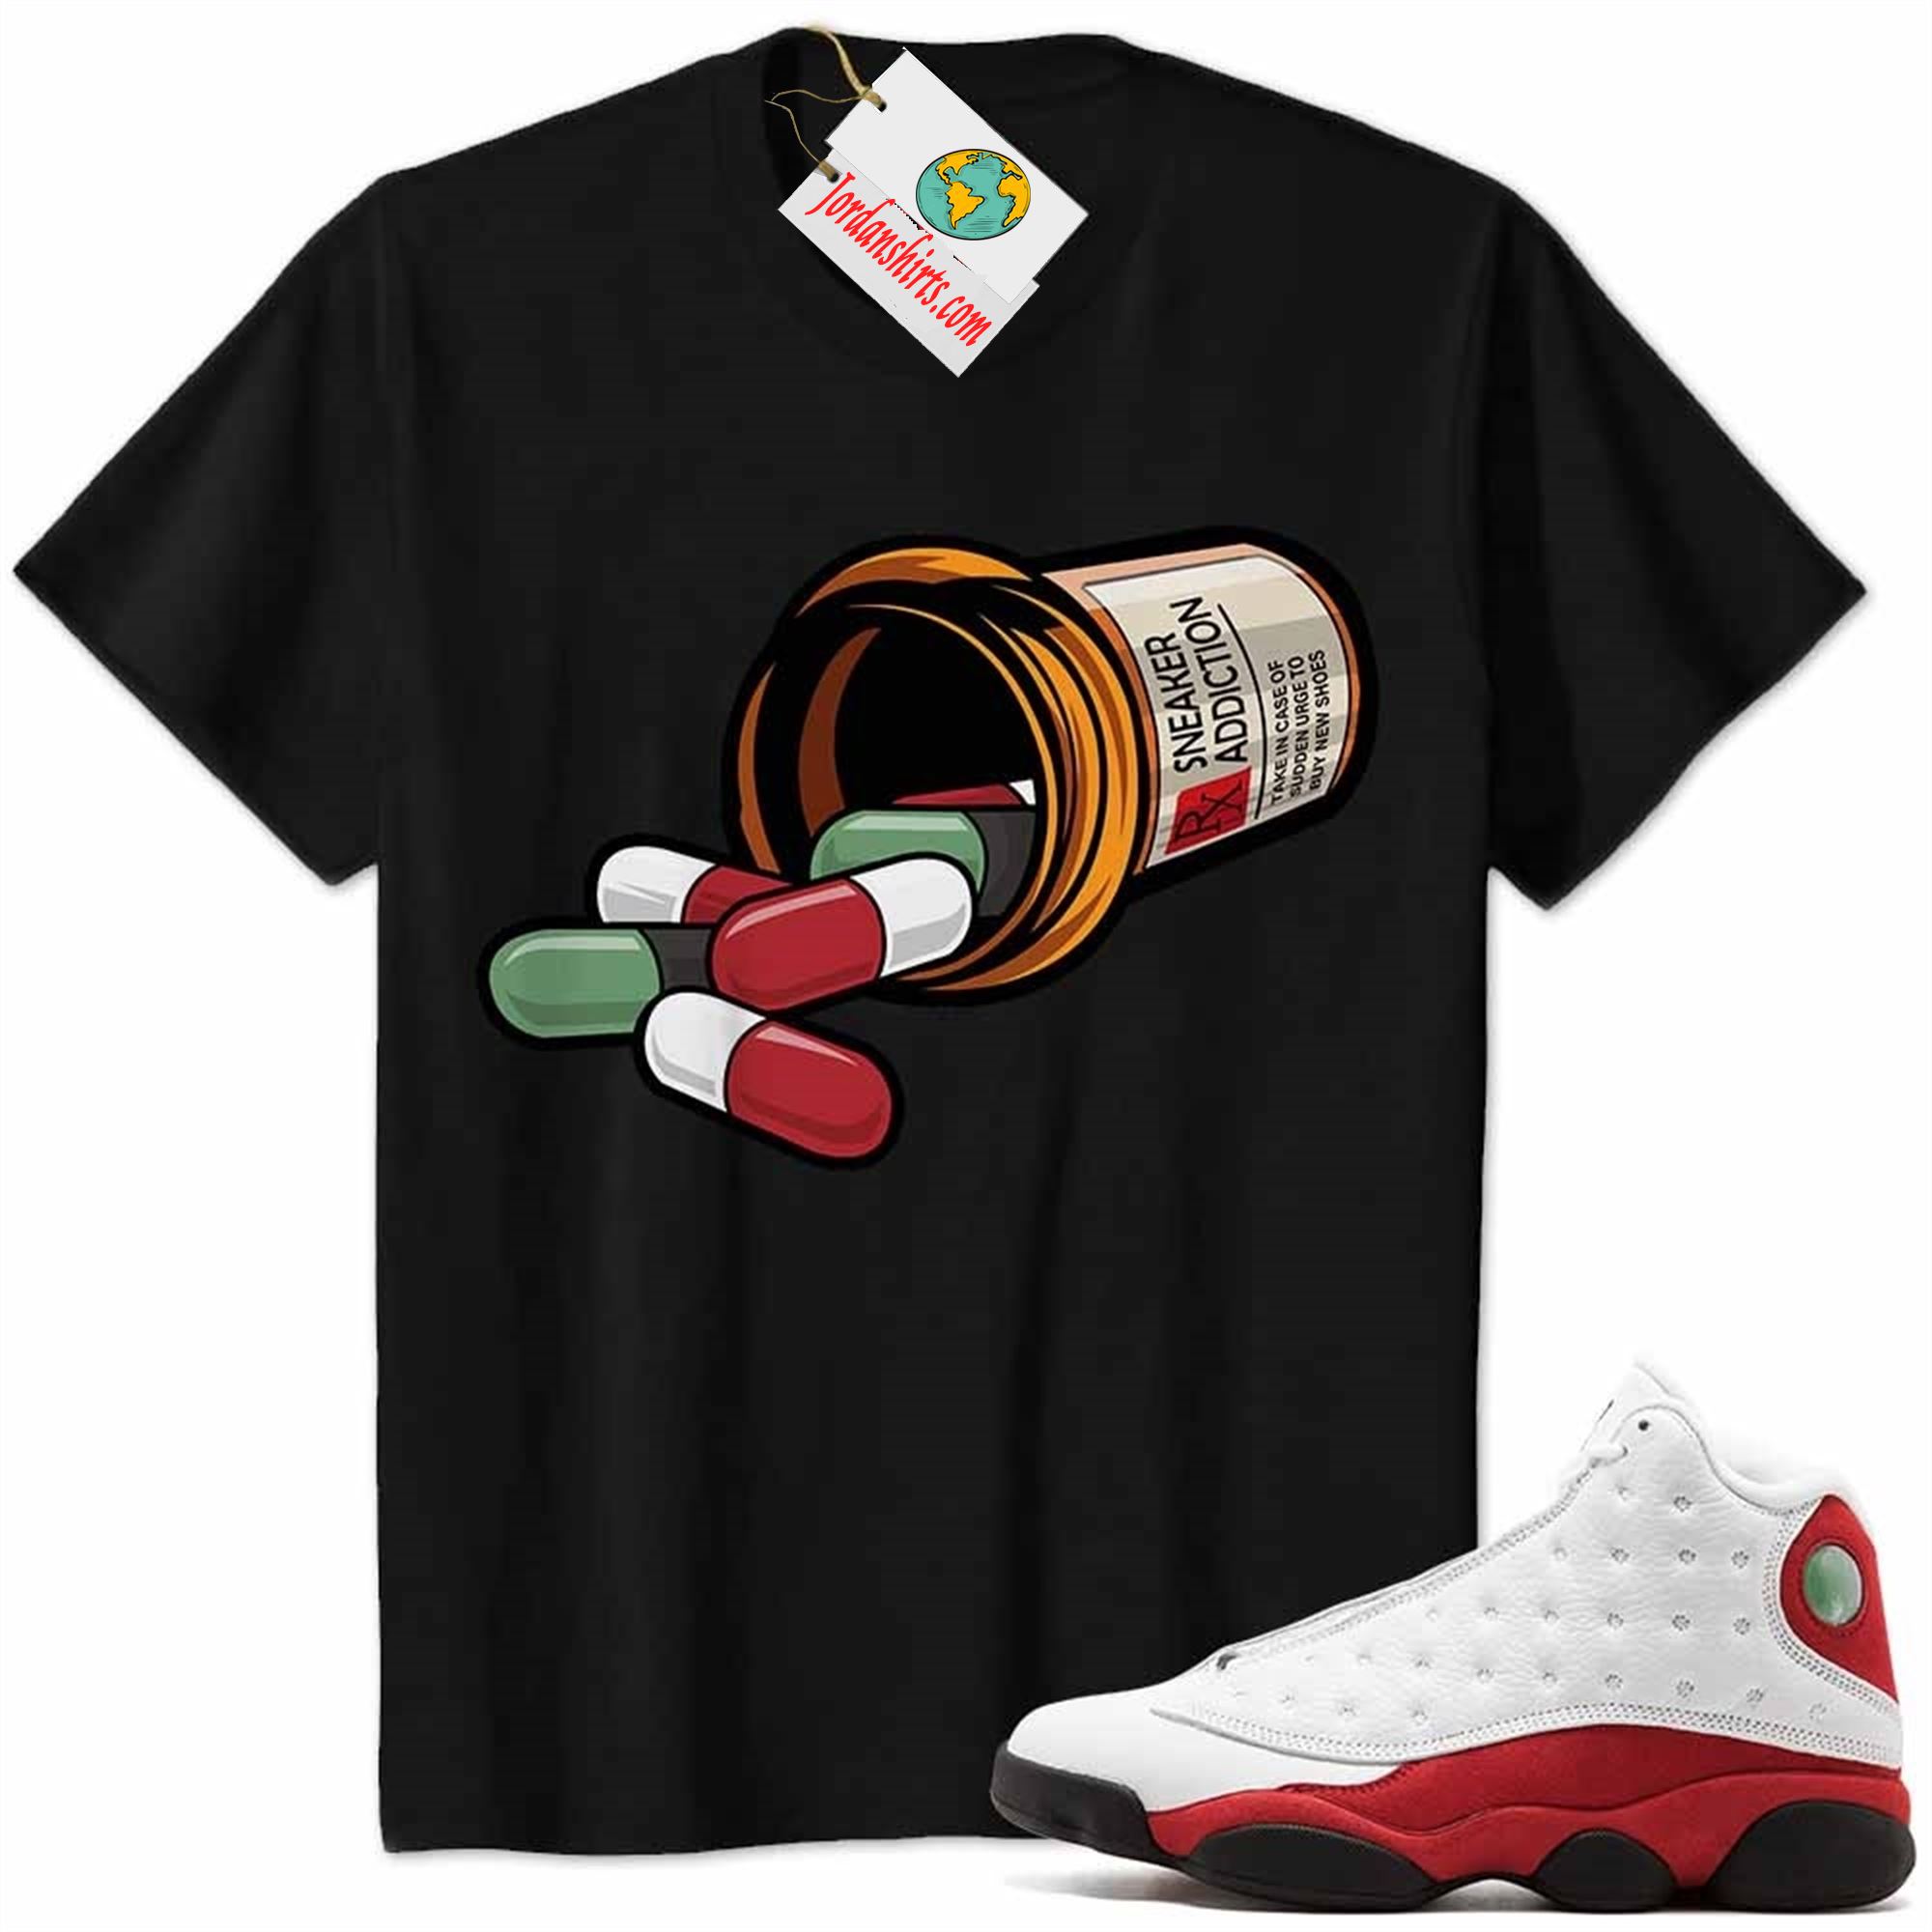 Jordan 13 Shirt, Rx Drugs Pill Bottle Sneaker Addiction Black Air Jordan 13 Chicago 13s Full Size Up To 5xl